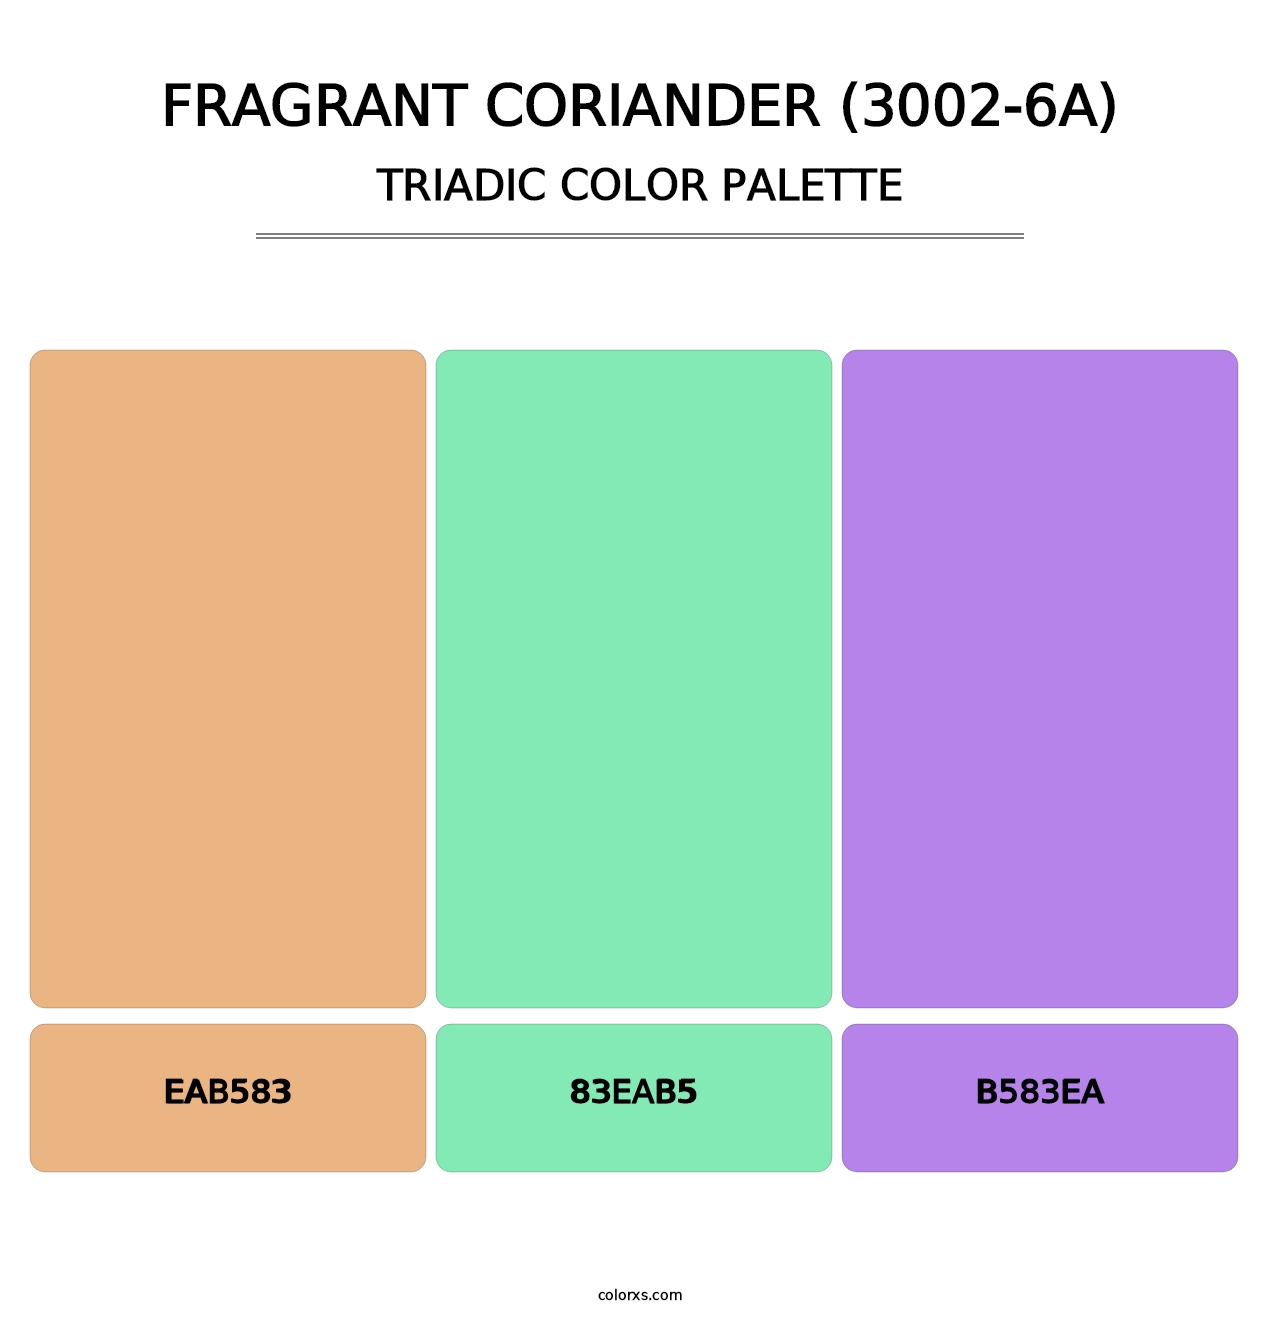 Fragrant Coriander (3002-6A) - Triadic Color Palette